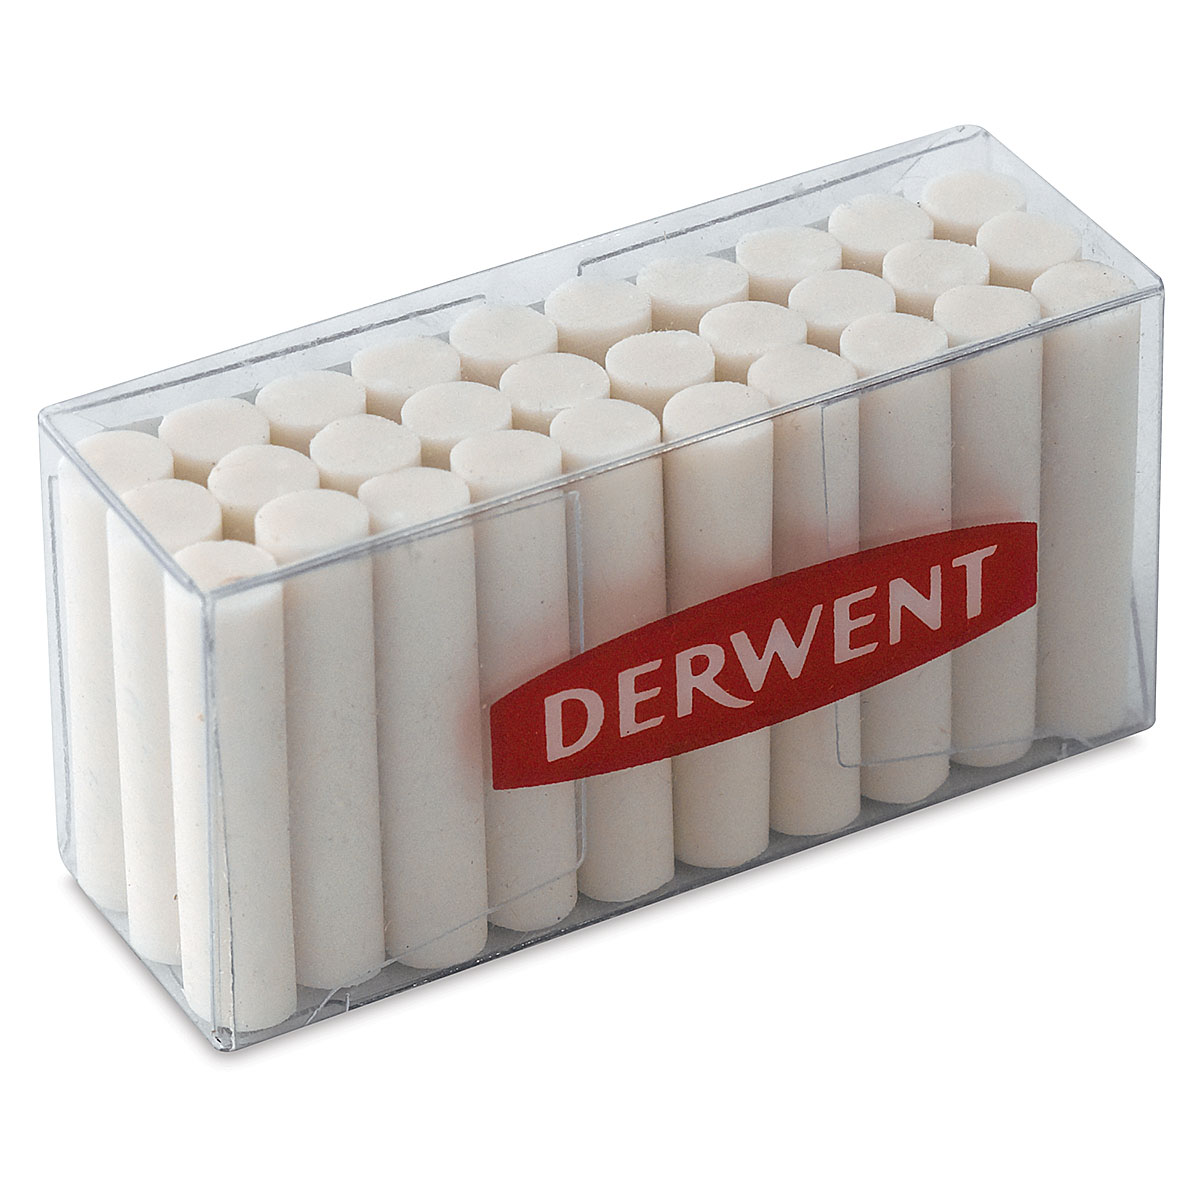 Derwent Battery Operated Electric Eraser